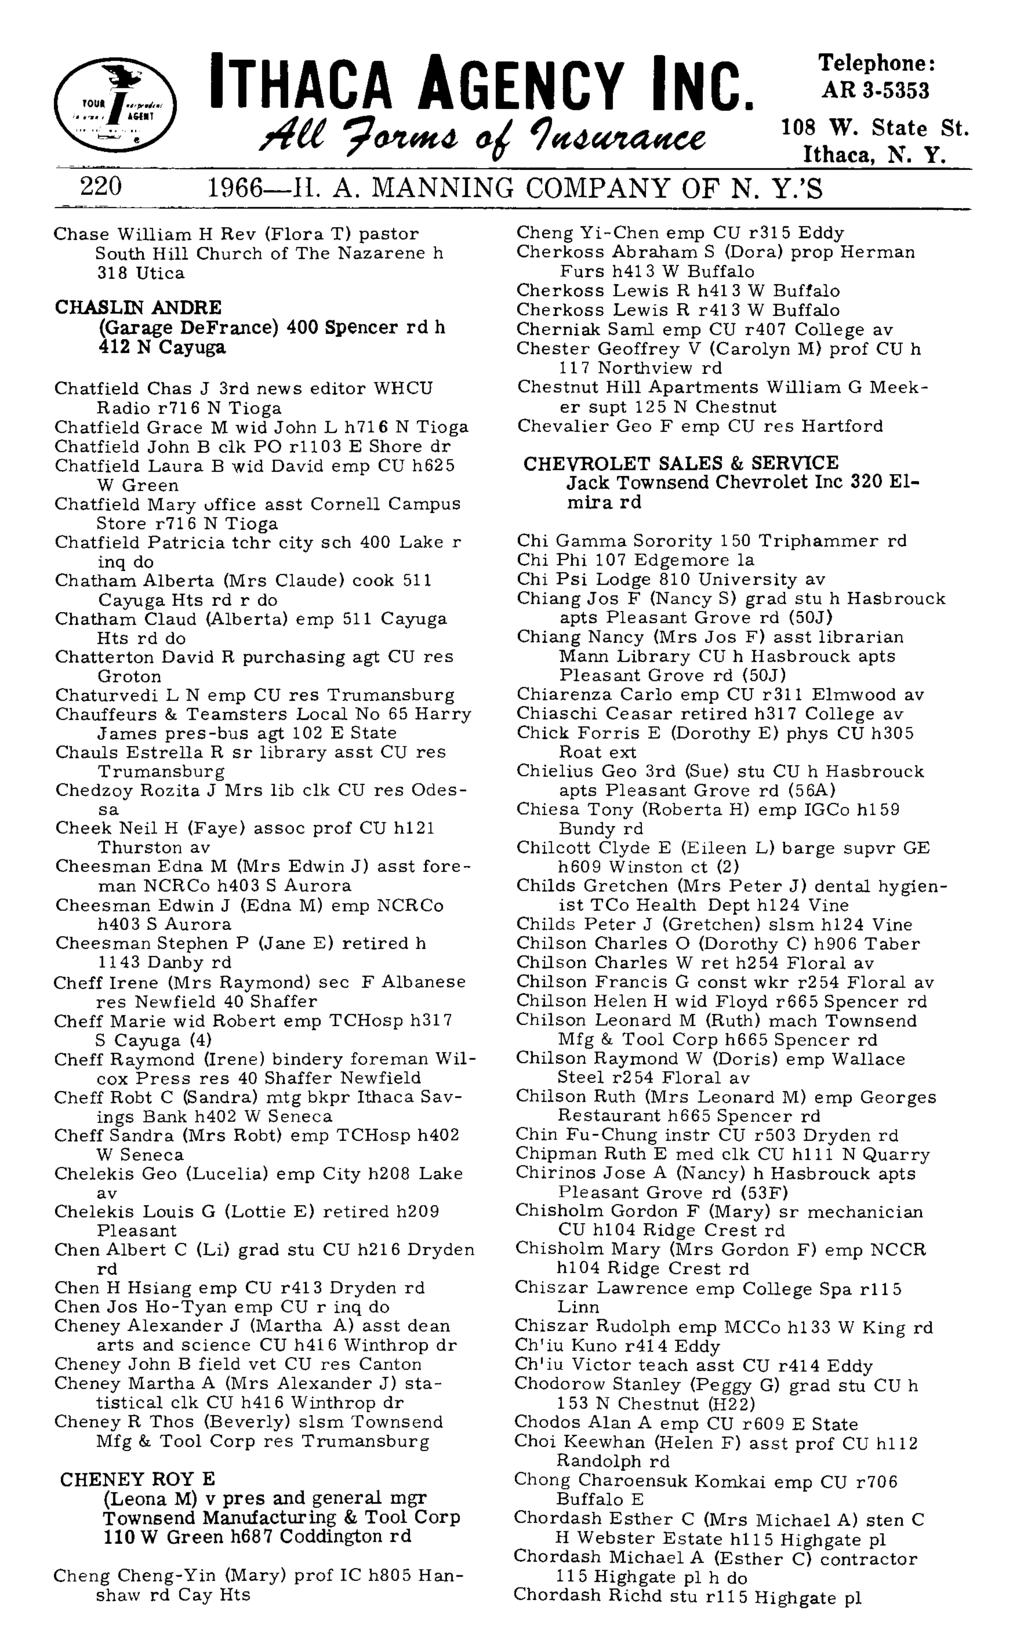 220 1966-H. A. MANNING COMPANY OF N. Y.